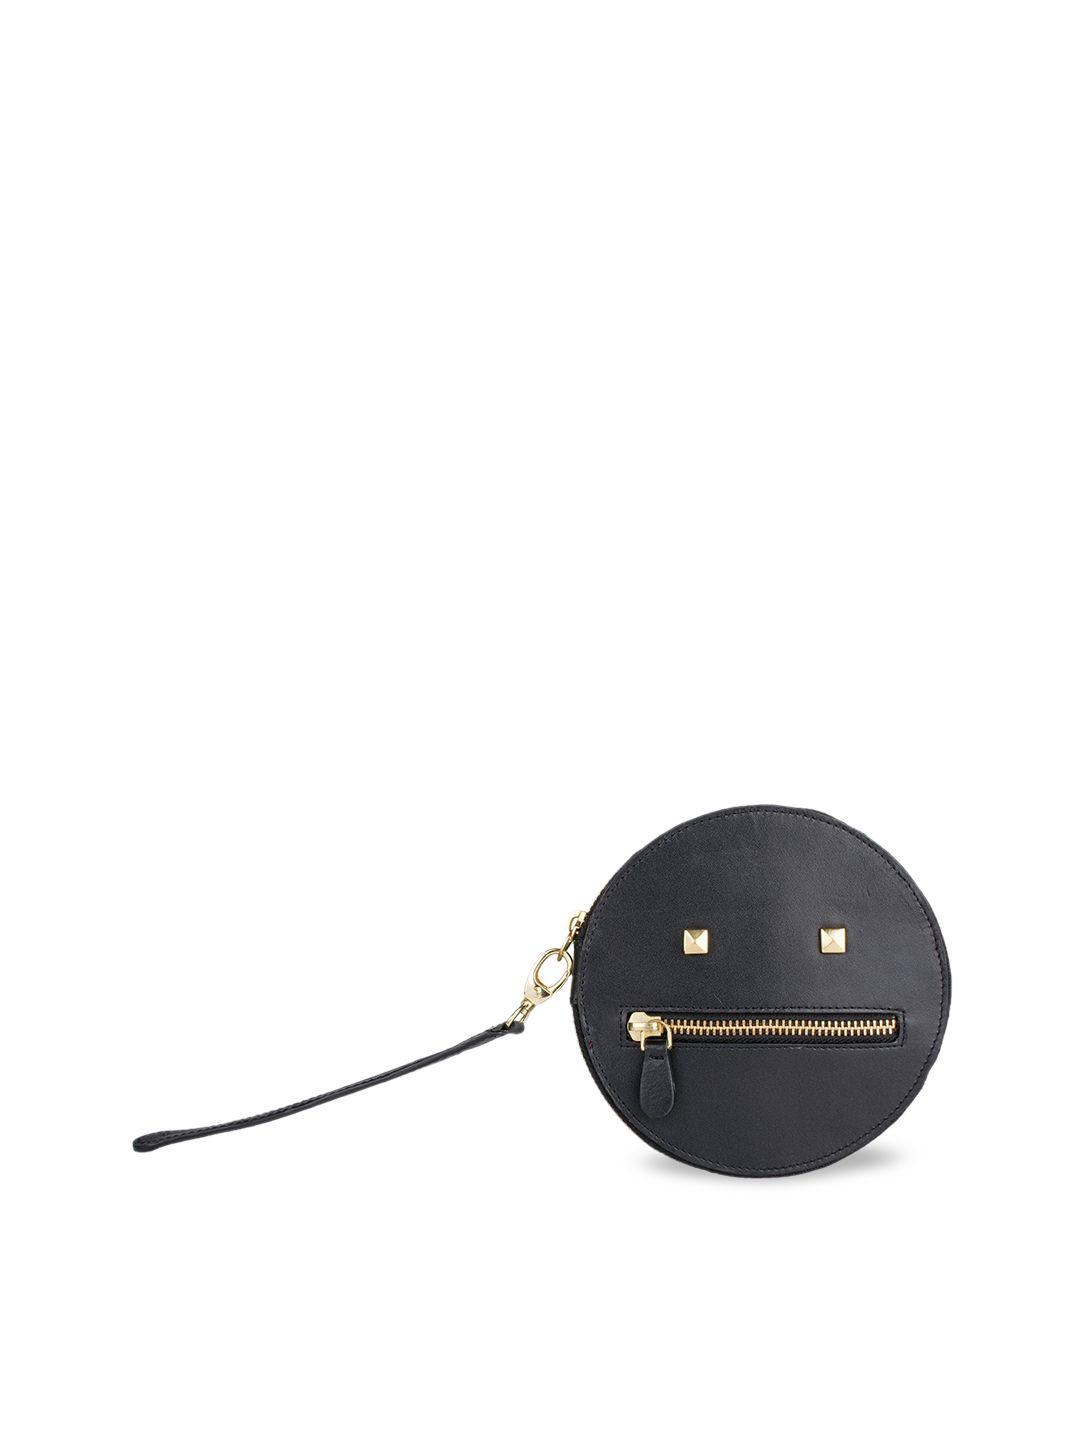 hidesign women black purse